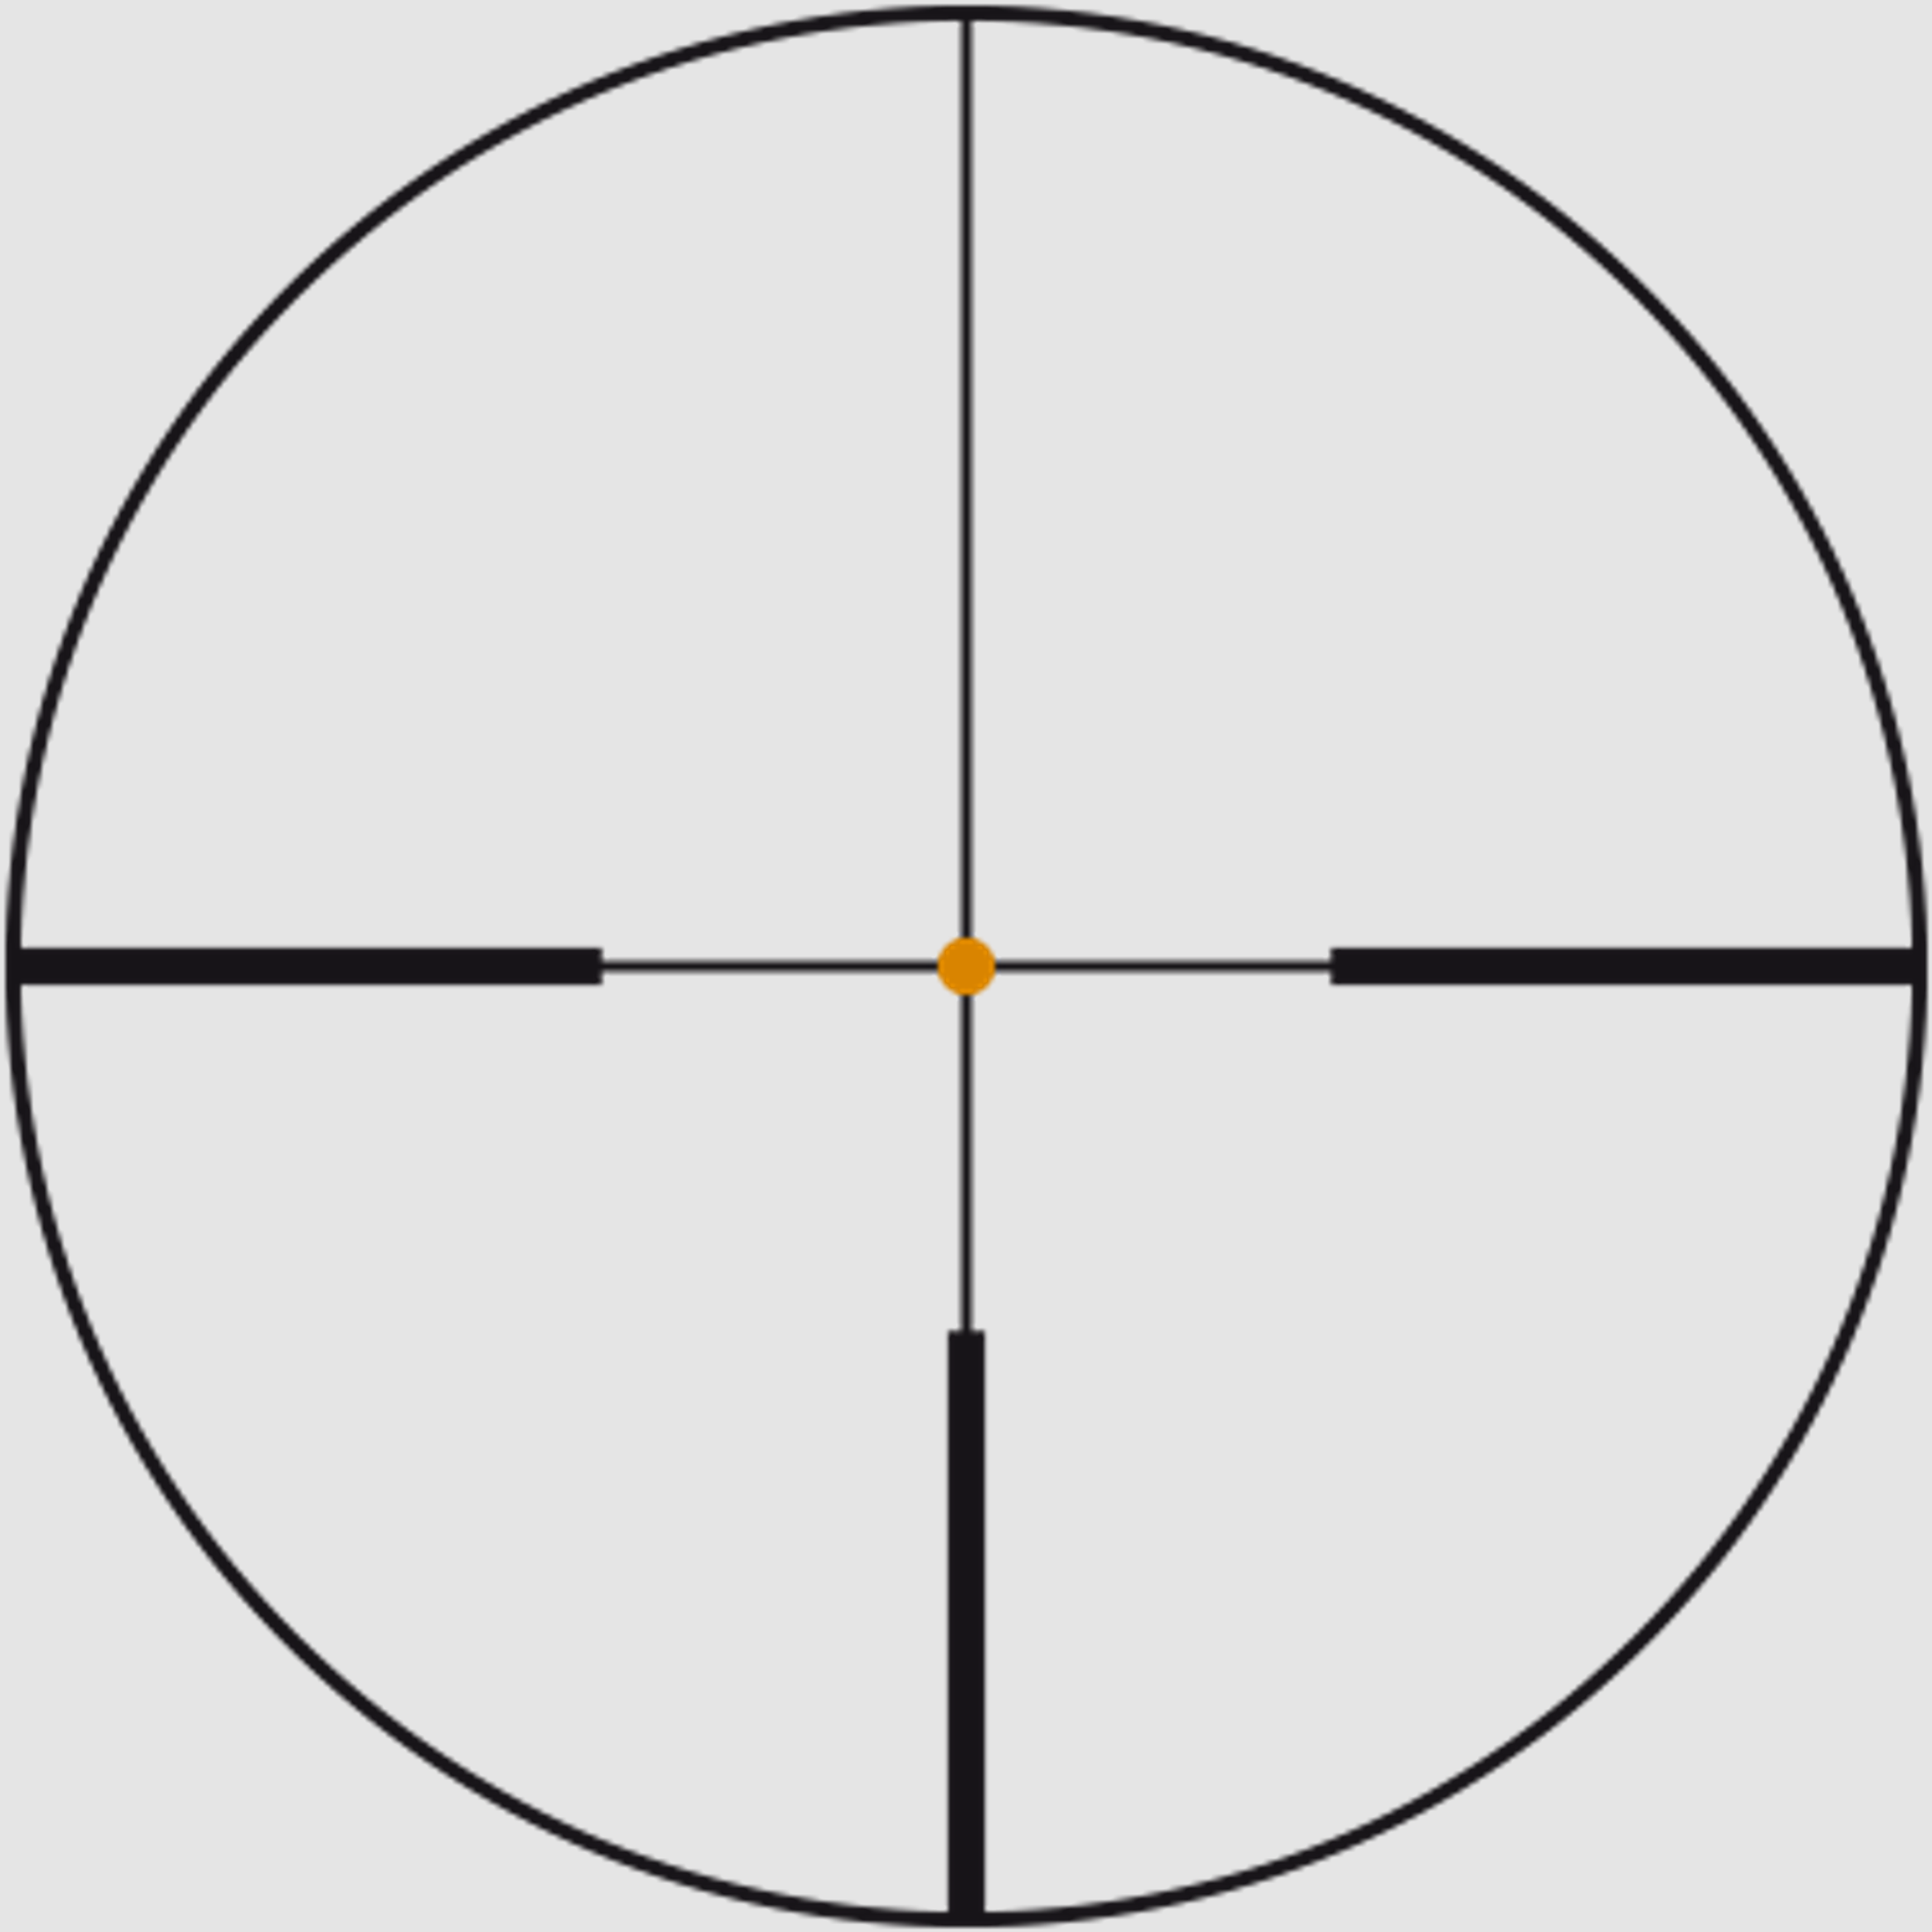 SWAROVSKI Zielfernrohr mit Leuchtabsehen 1,7-13,3x42 P Z8i SR Abs. 4A-I/4A-300I